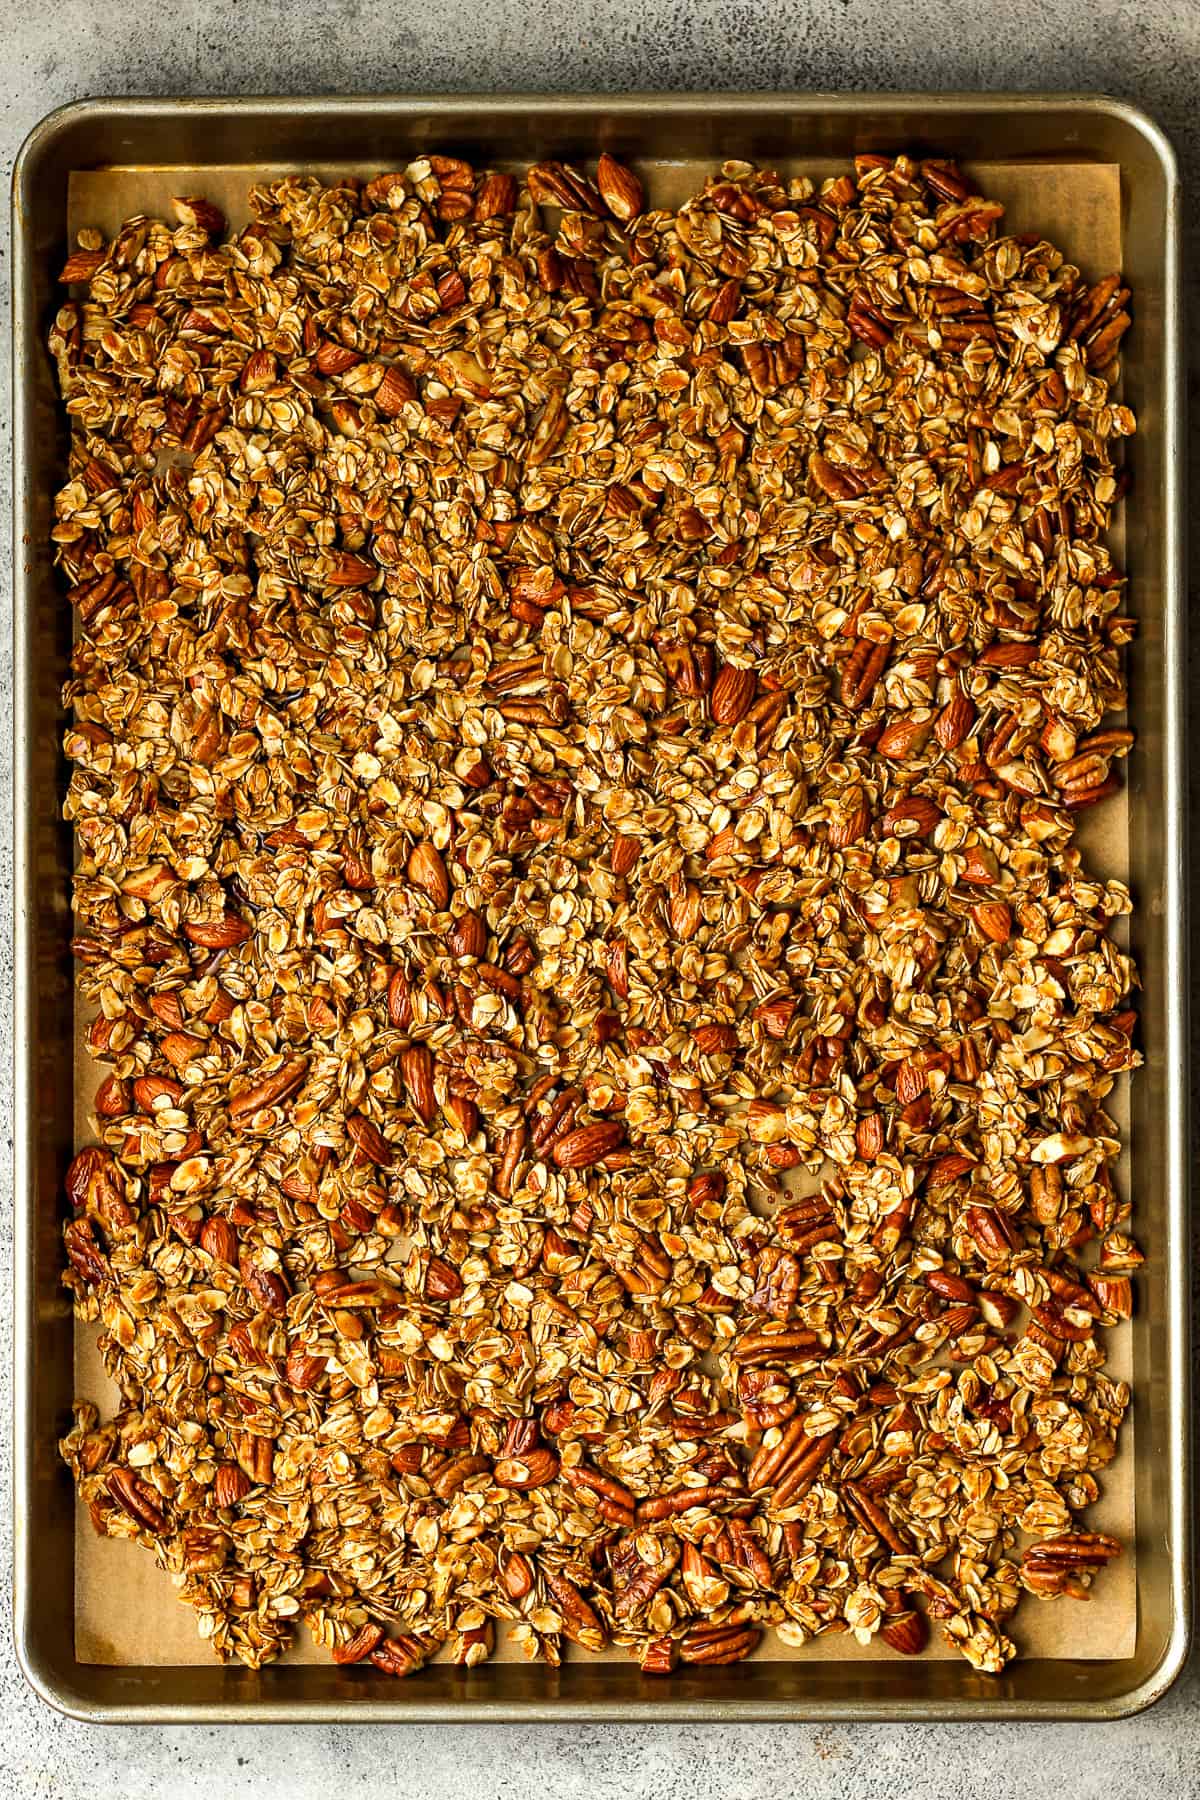 A sheet pan of wet granola mixture.